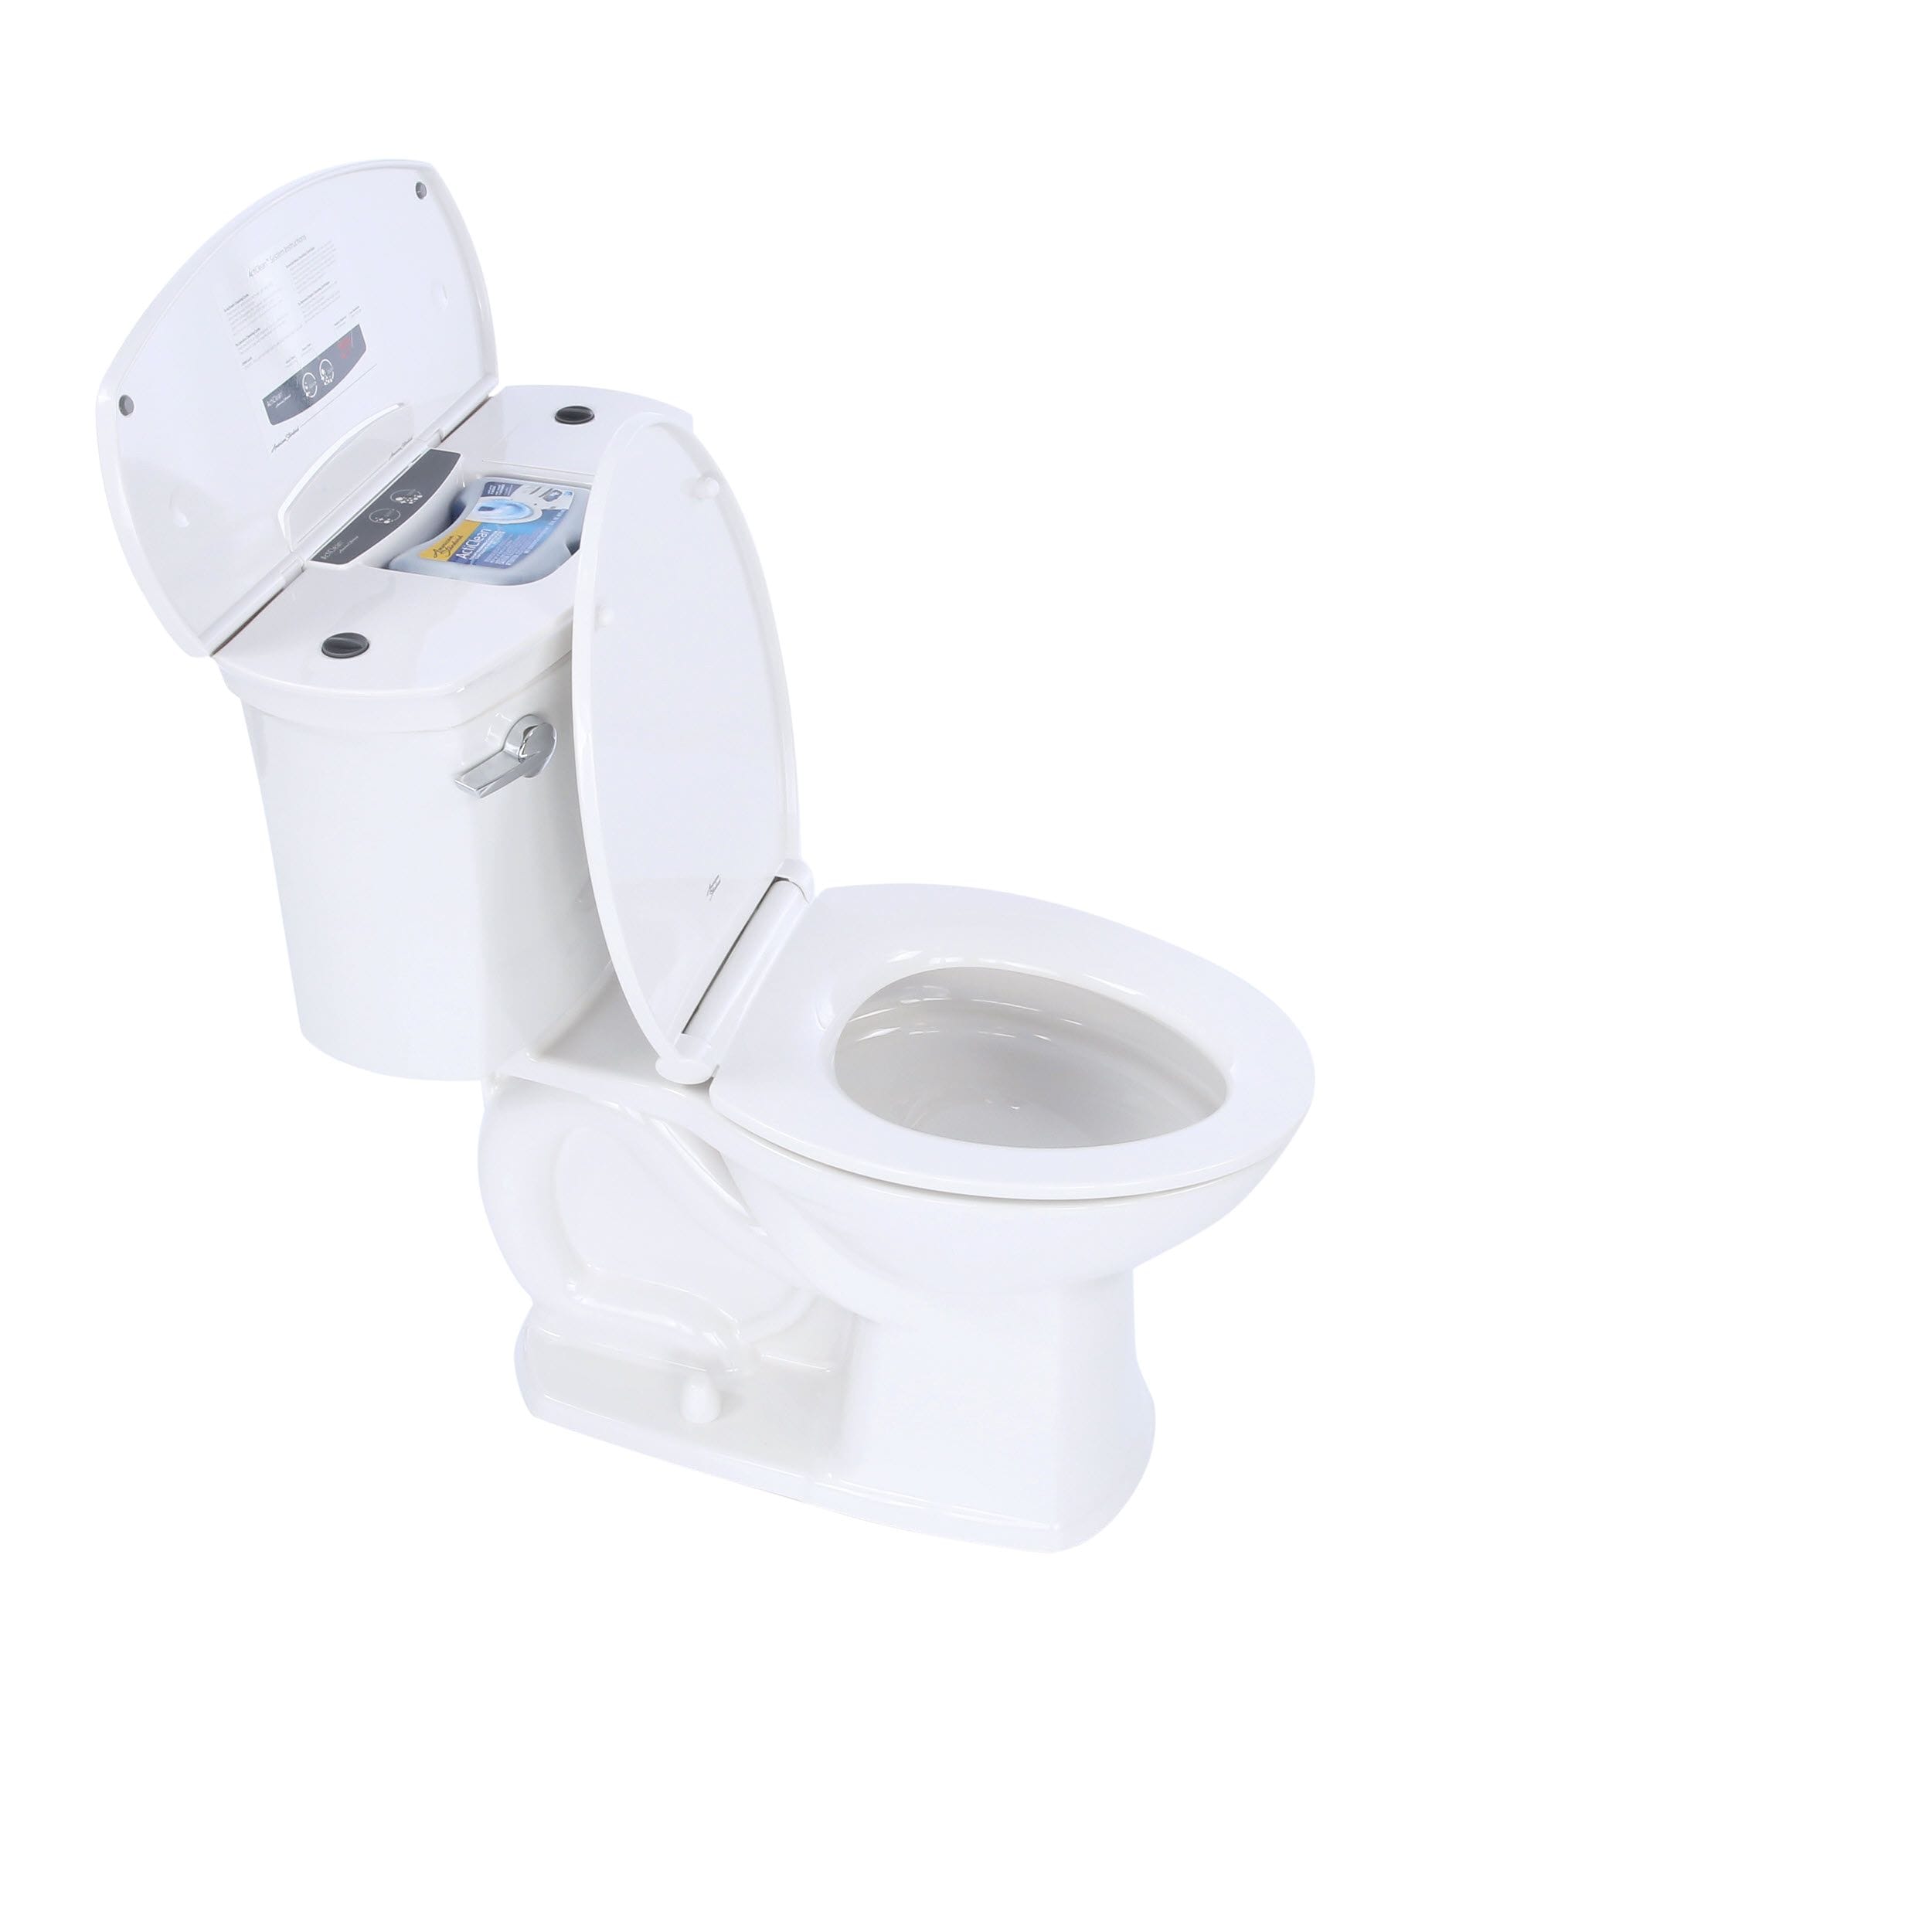 Set 4 white ceramic childrens toilet toilets S-trap 22" x 13" x 12" selling each 